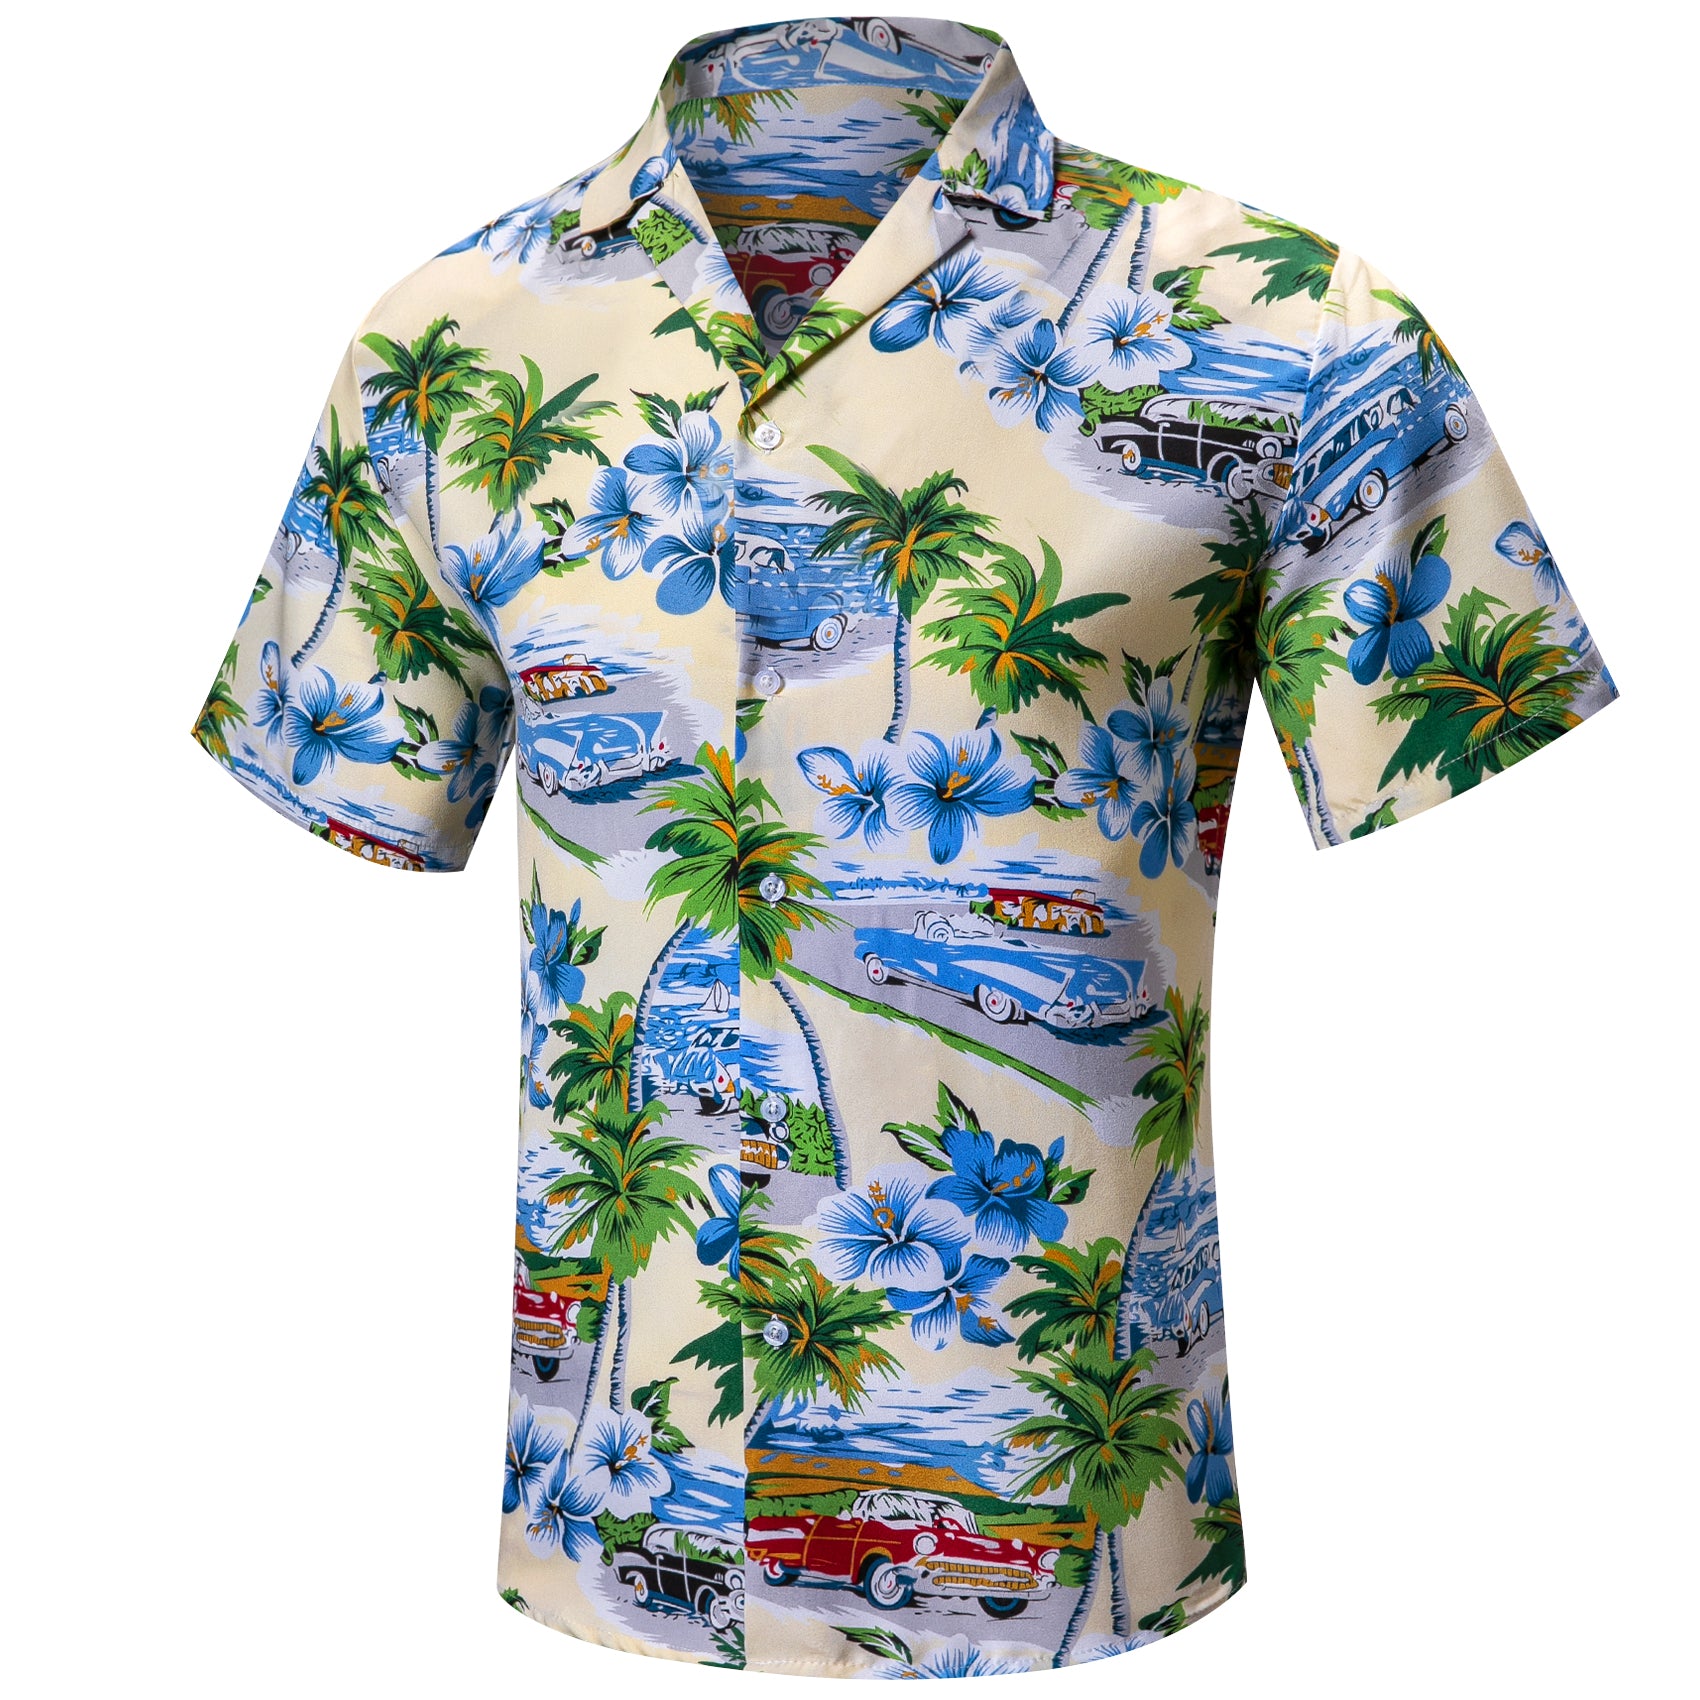 Barry.wang Pale Green Seaside Floral Short Sleeves Shirt